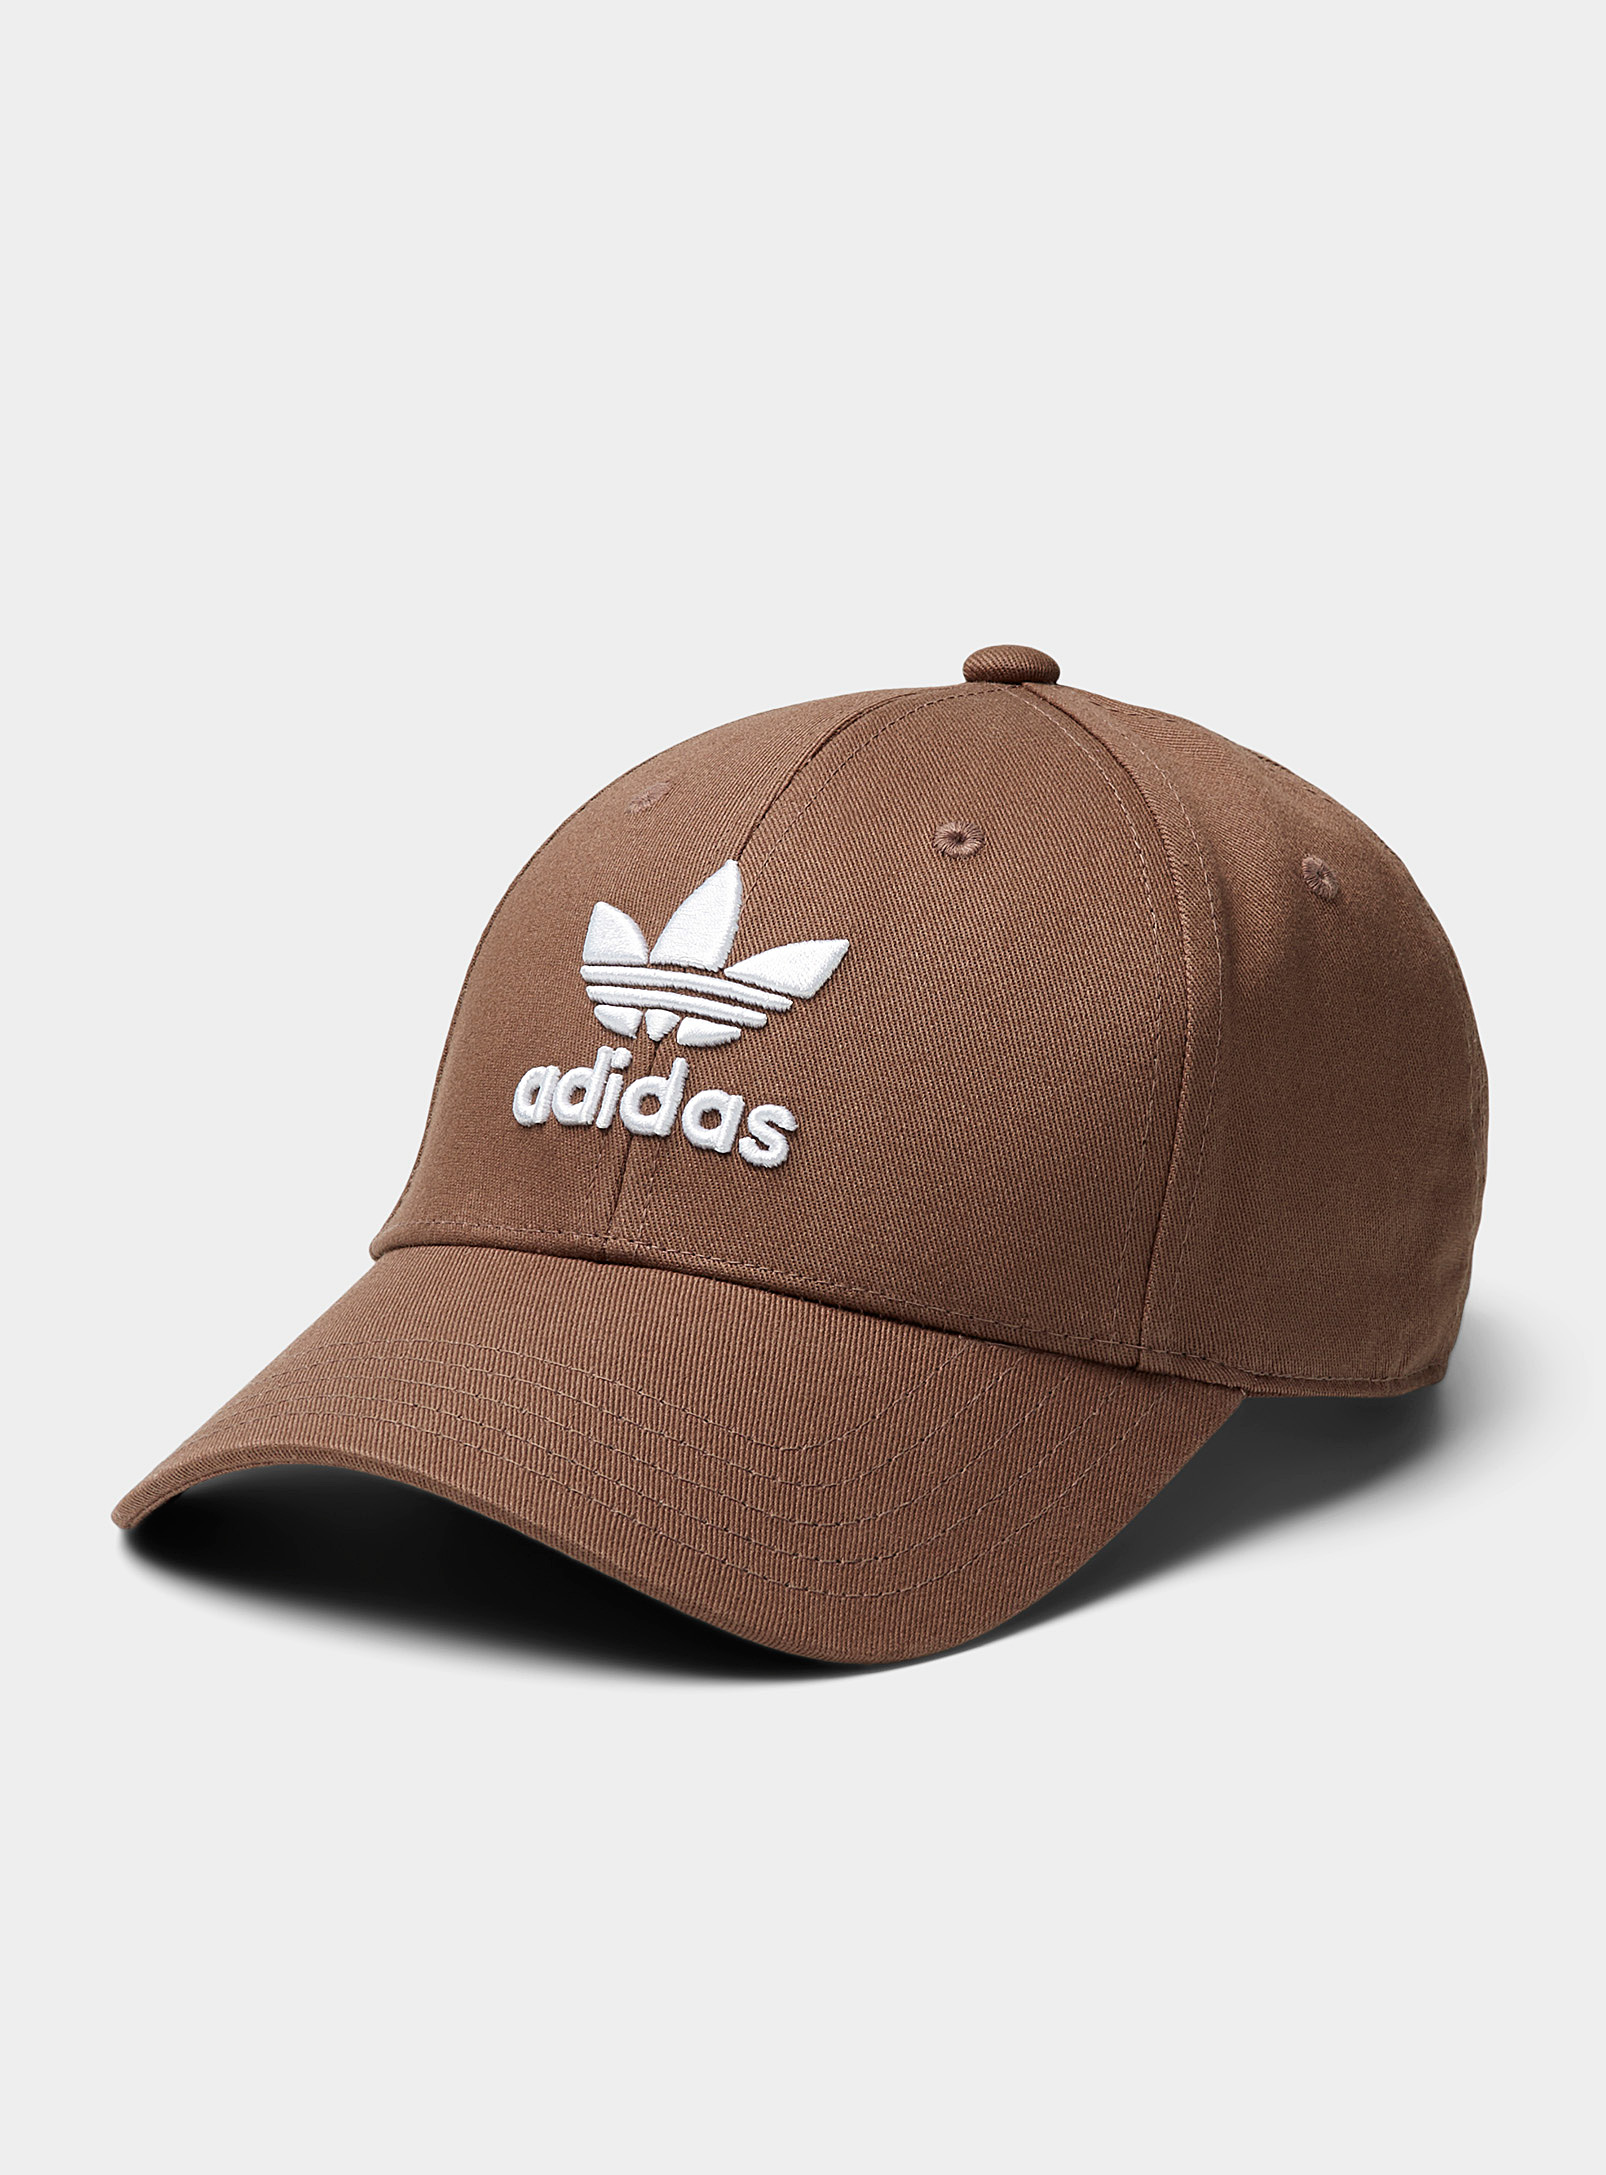 Adidas Originals Logo Embroidery Baseball Cap In Brown